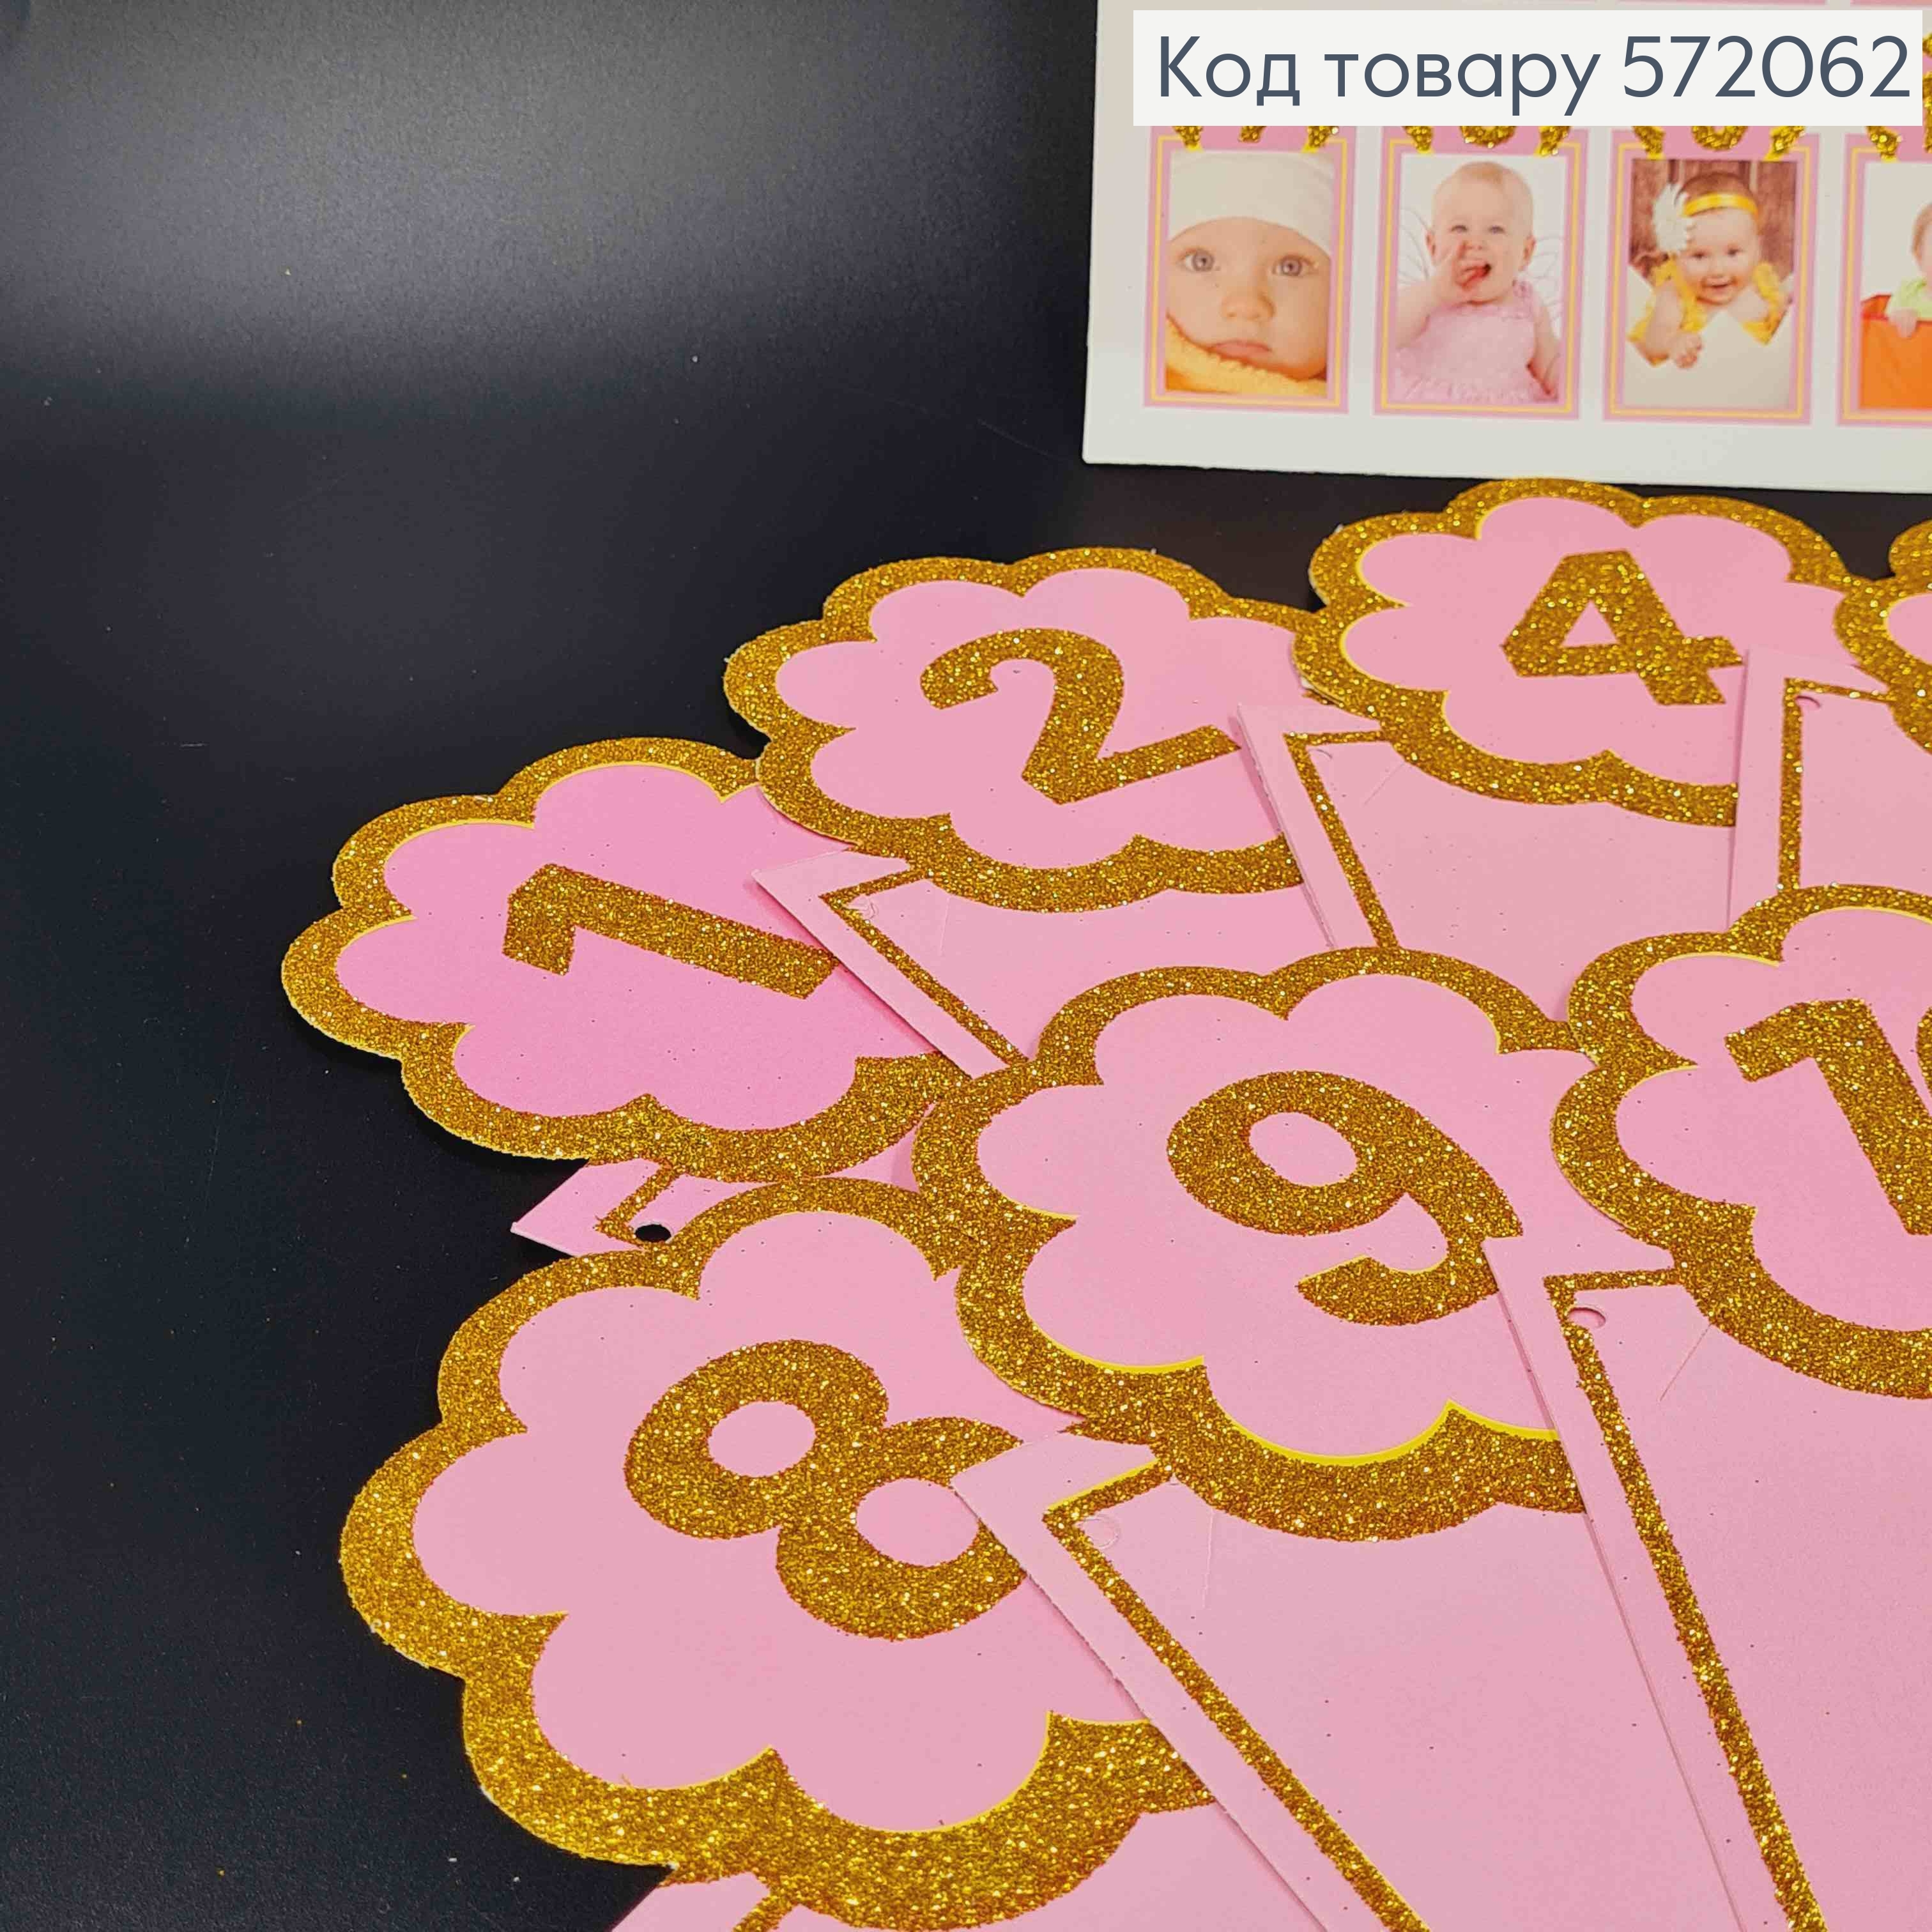 Гирлянда бумажная, розовая рамочка для фото с цифрами золотого цвета. 572062 фото 2